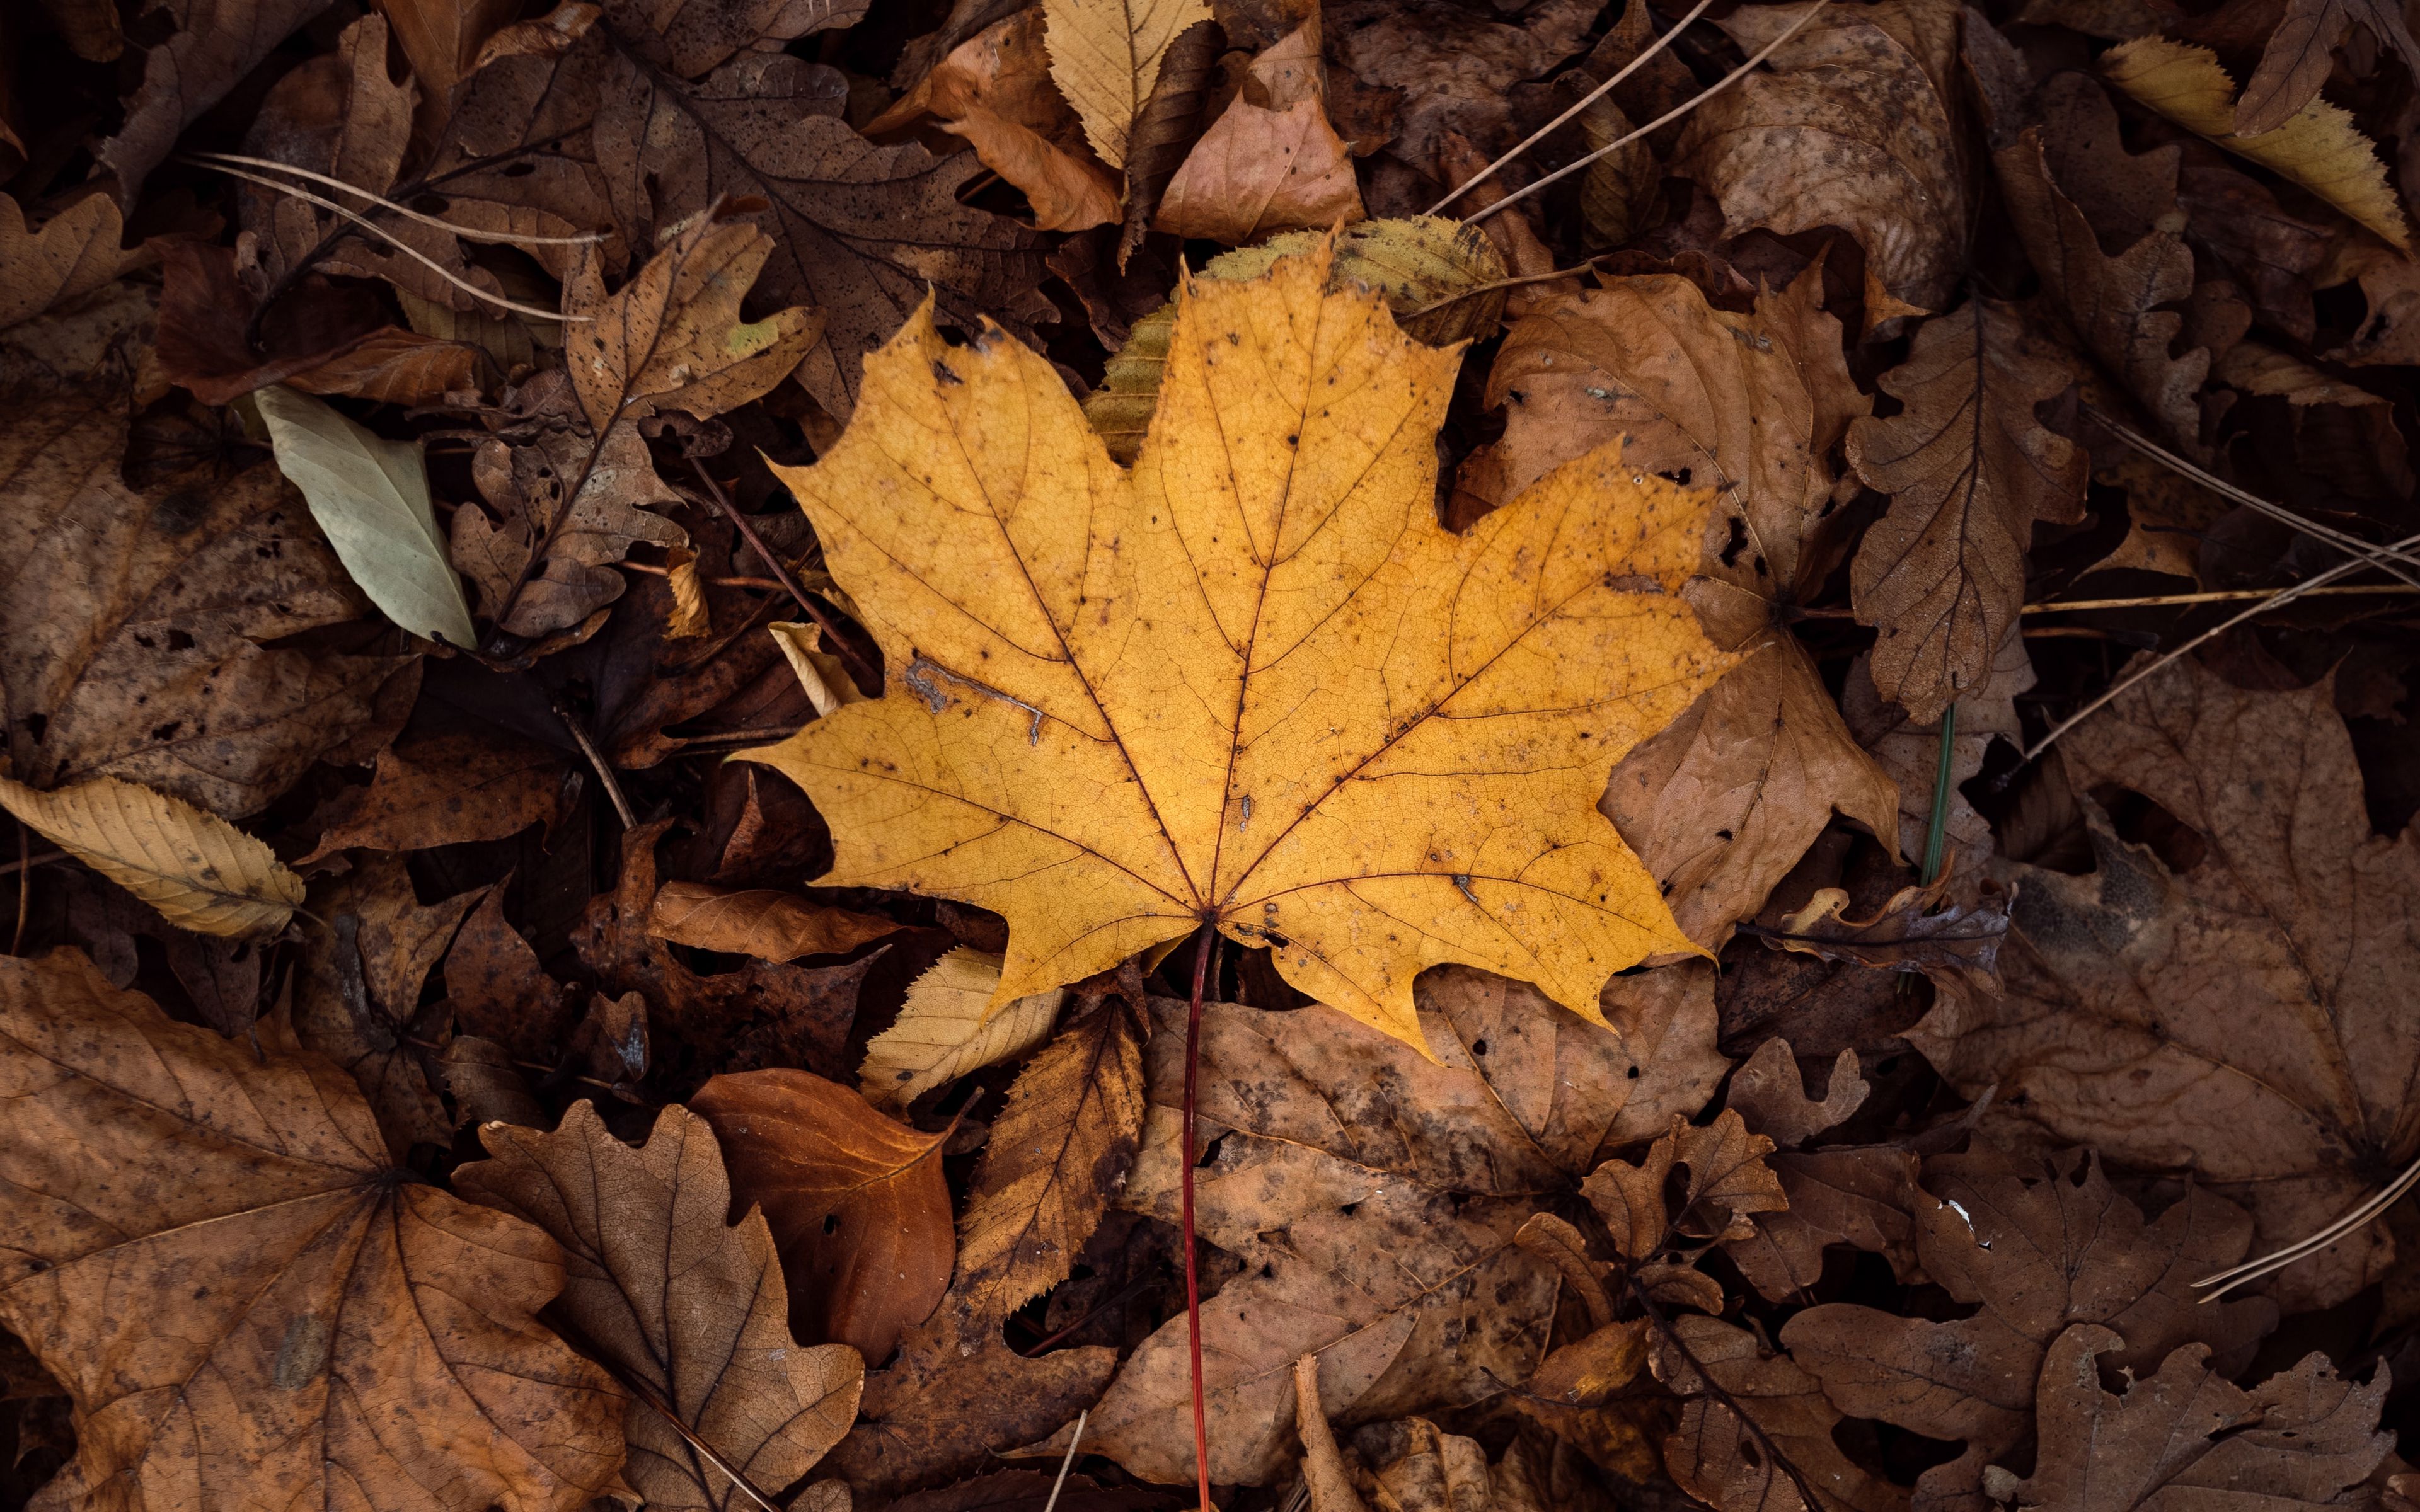 Download wallpaper 3840x2400 leaves, autumn, dry, foliage 4k ultra hd